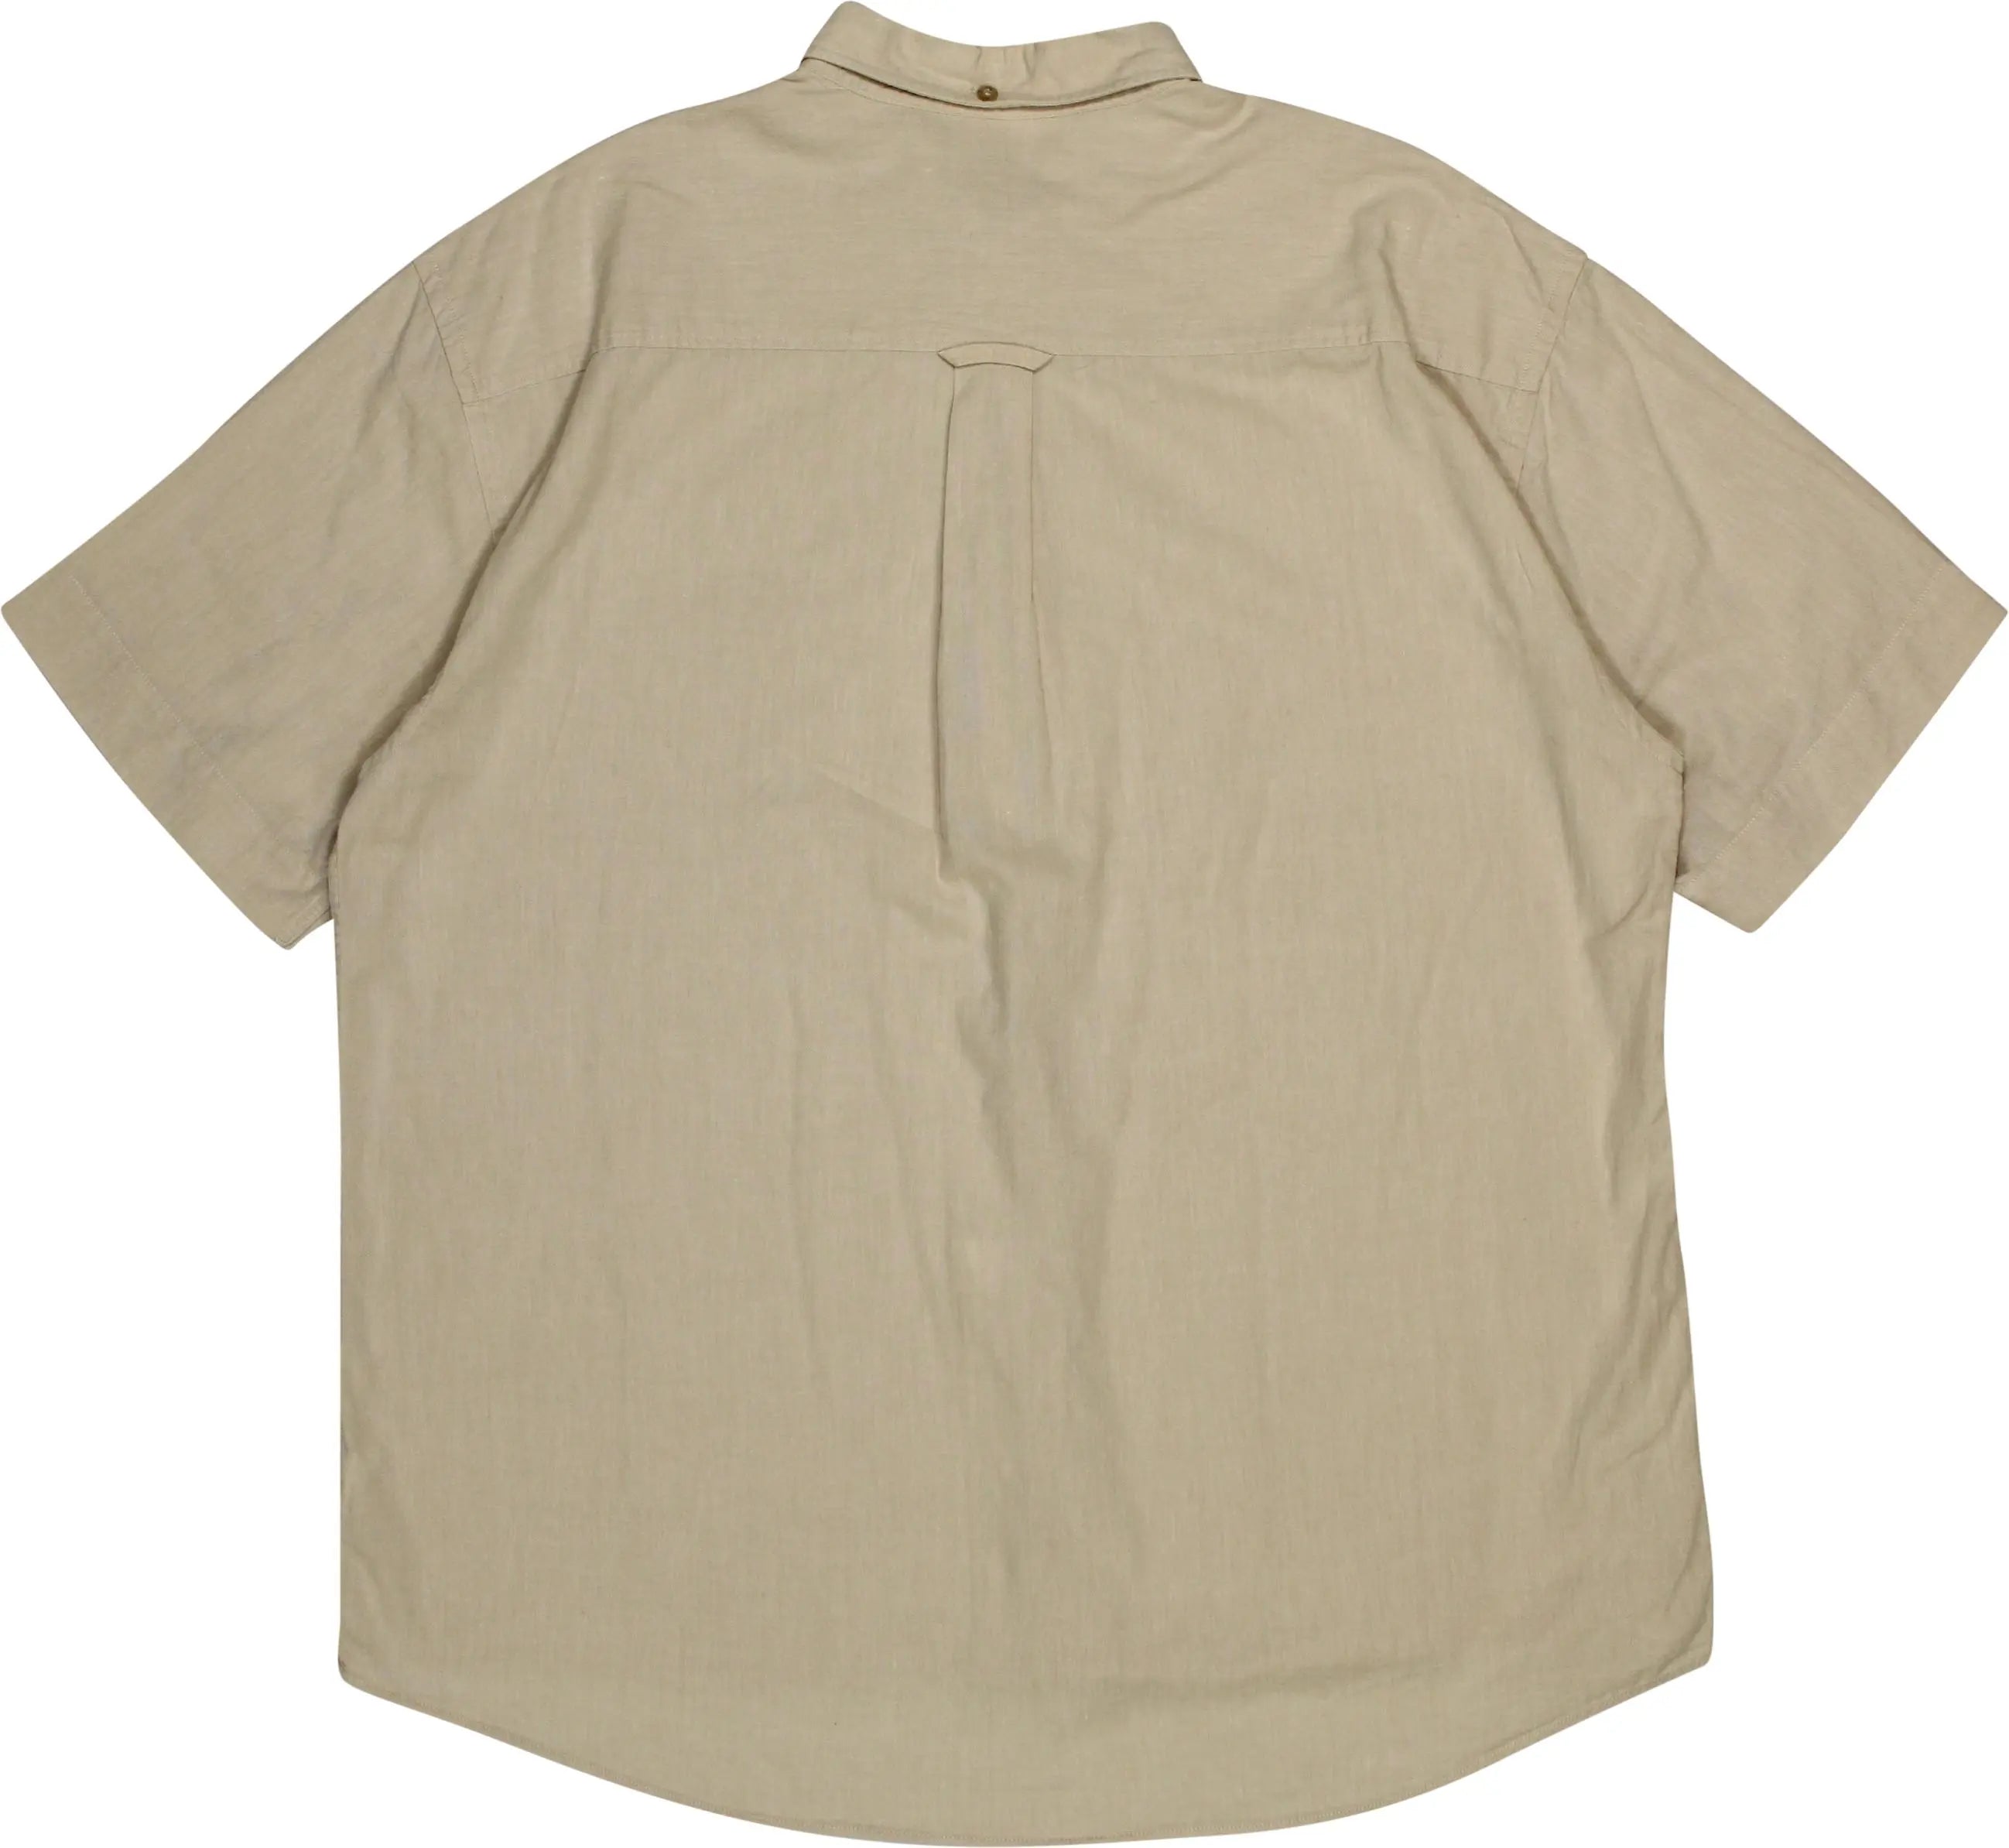 Camel Active - Beige Short Sleeve Shirt- ThriftTale.com - Vintage and second handclothing